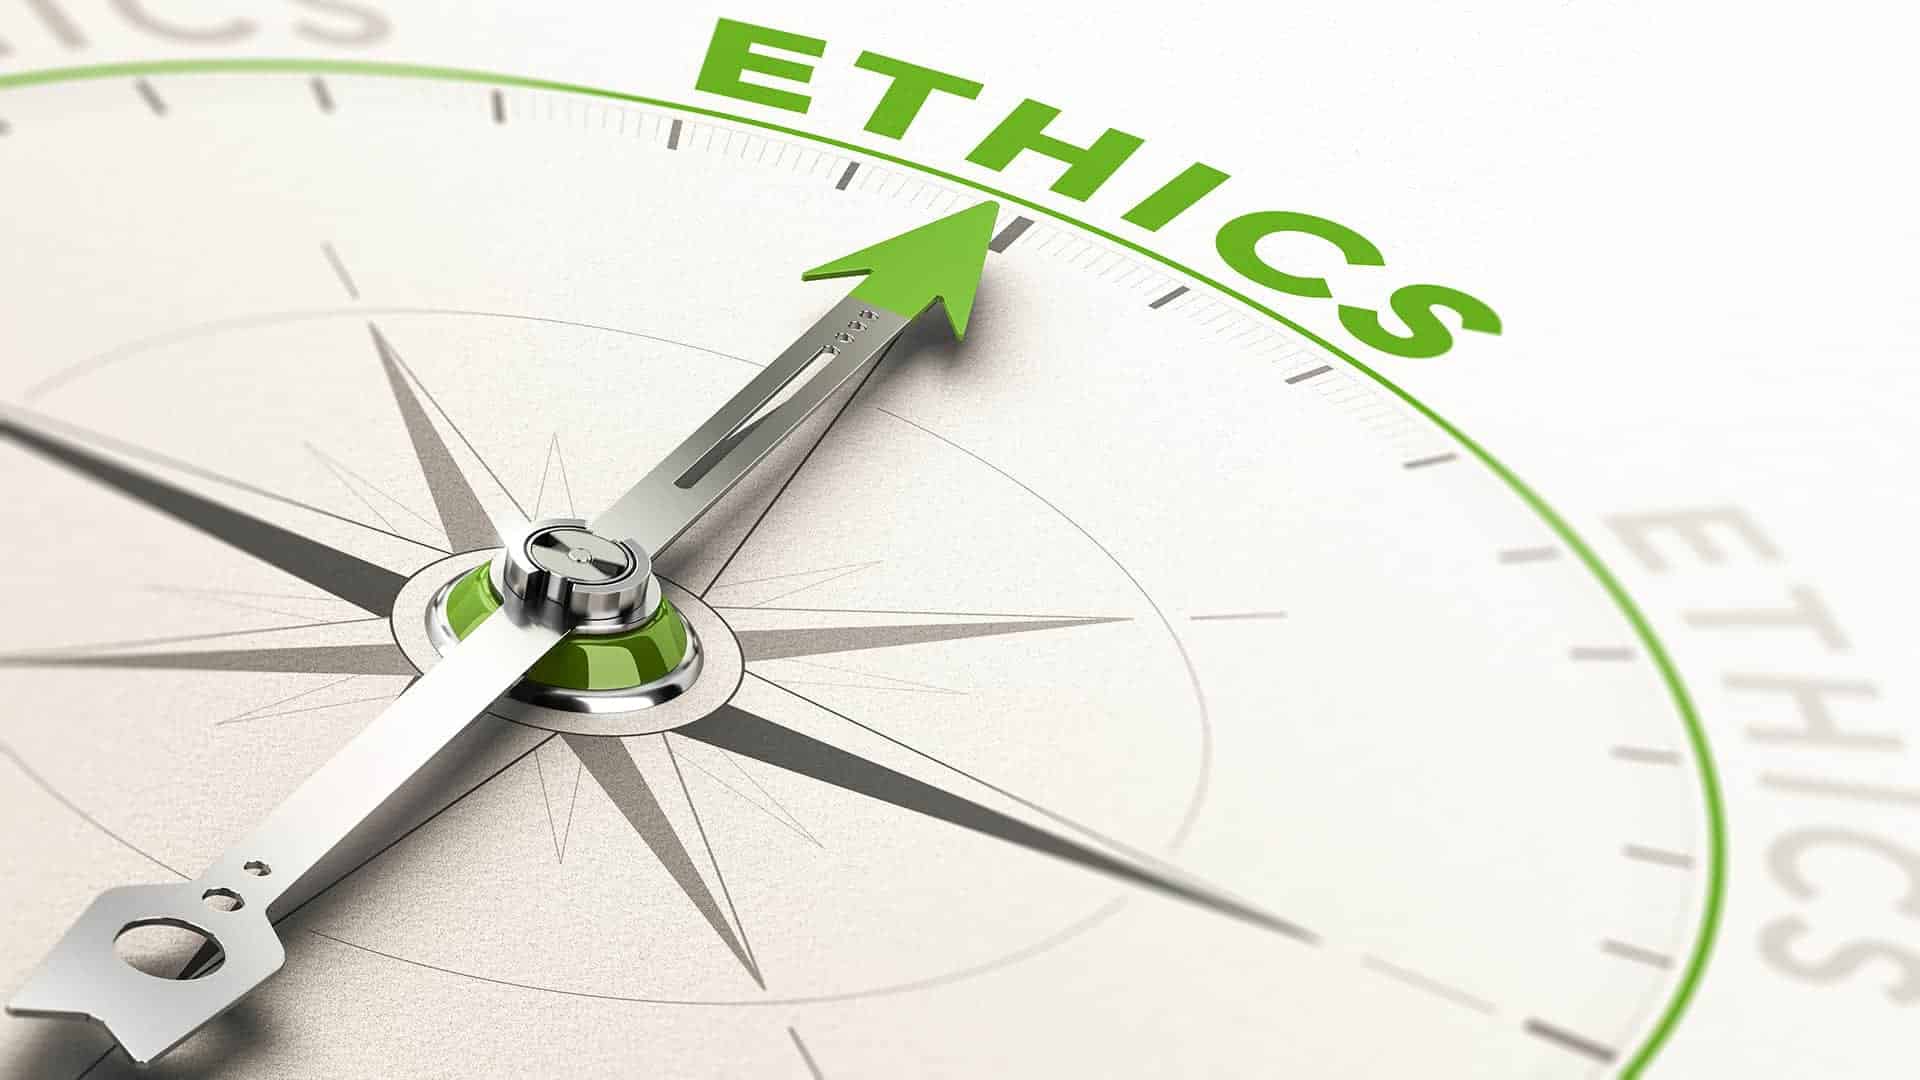 RMAI 2018 Code of Ethics Enforcement